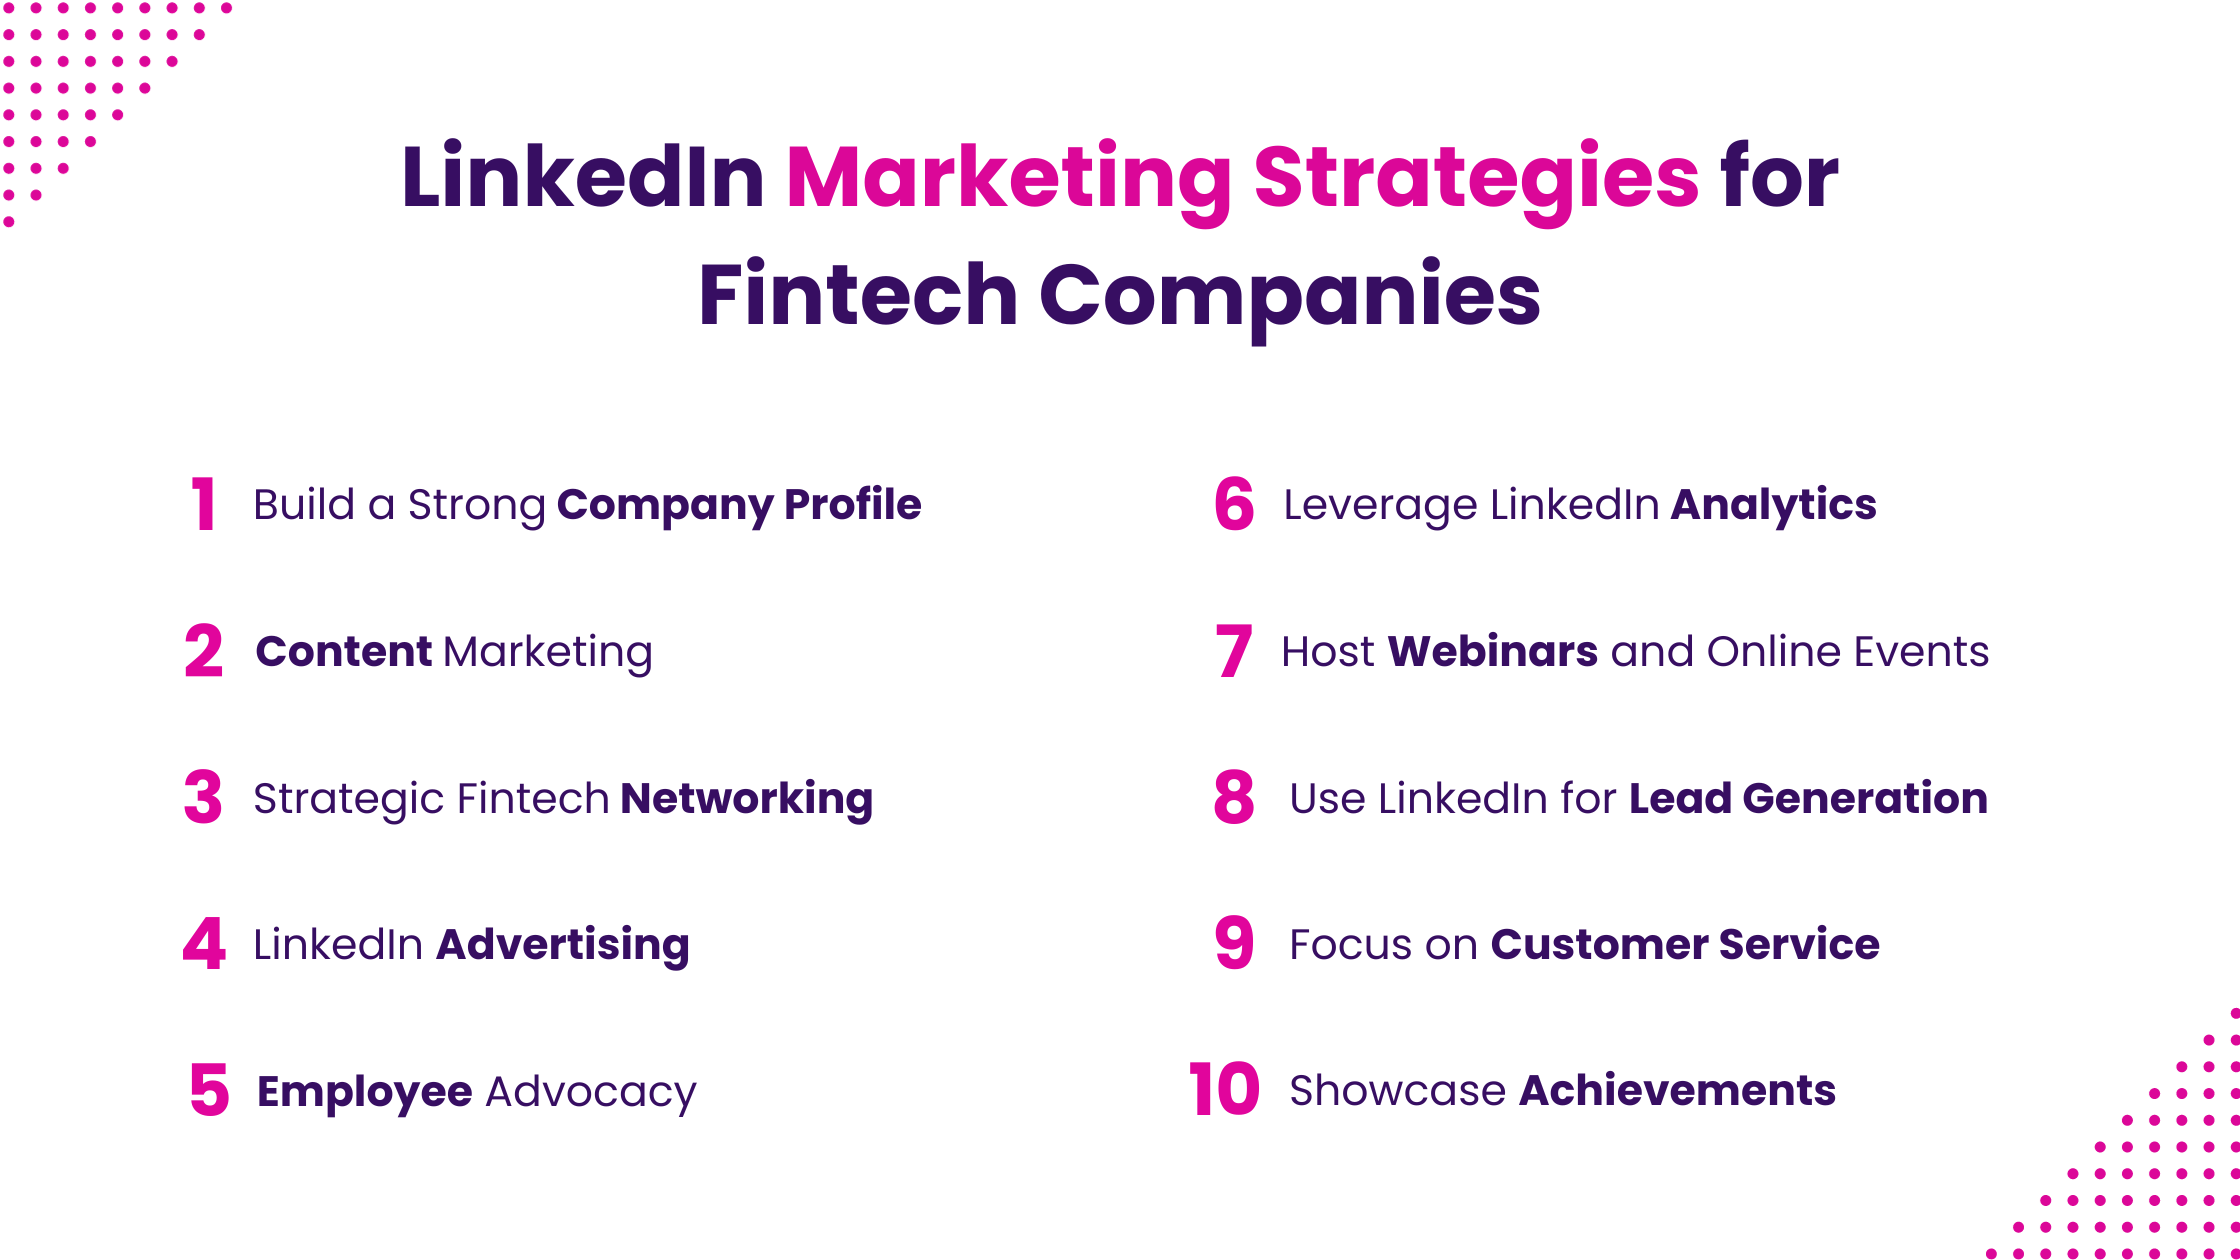 LinkedIn Marketing Strategies for Fintech Companies